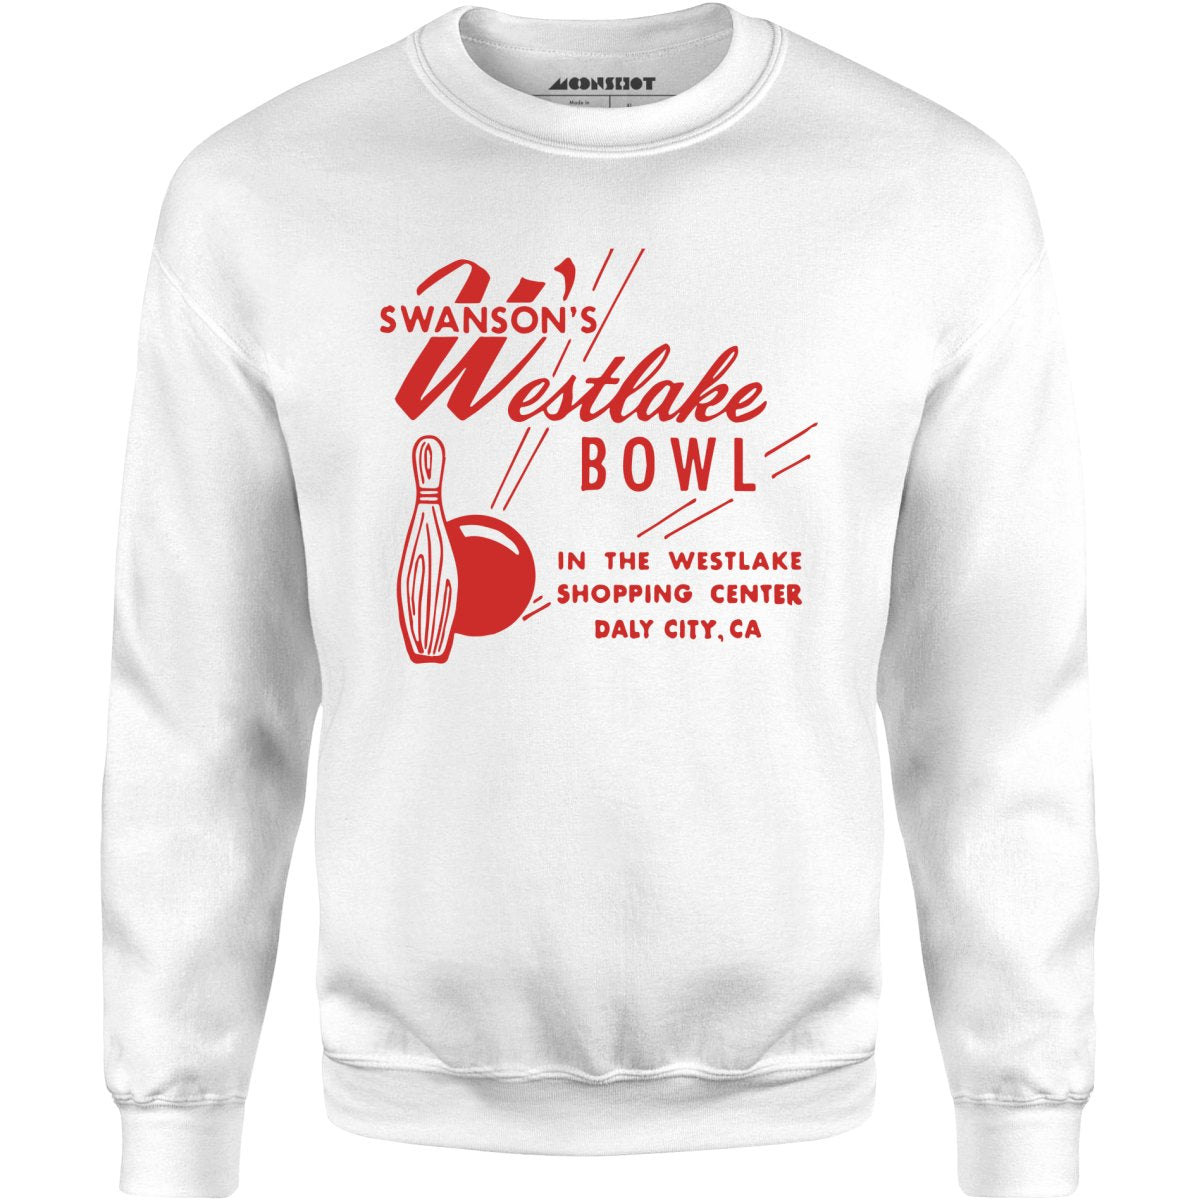 Swanson's Westlake Bowl - Daly City, CA - Vintage Bowling Alley - Unisex Sweatshirt